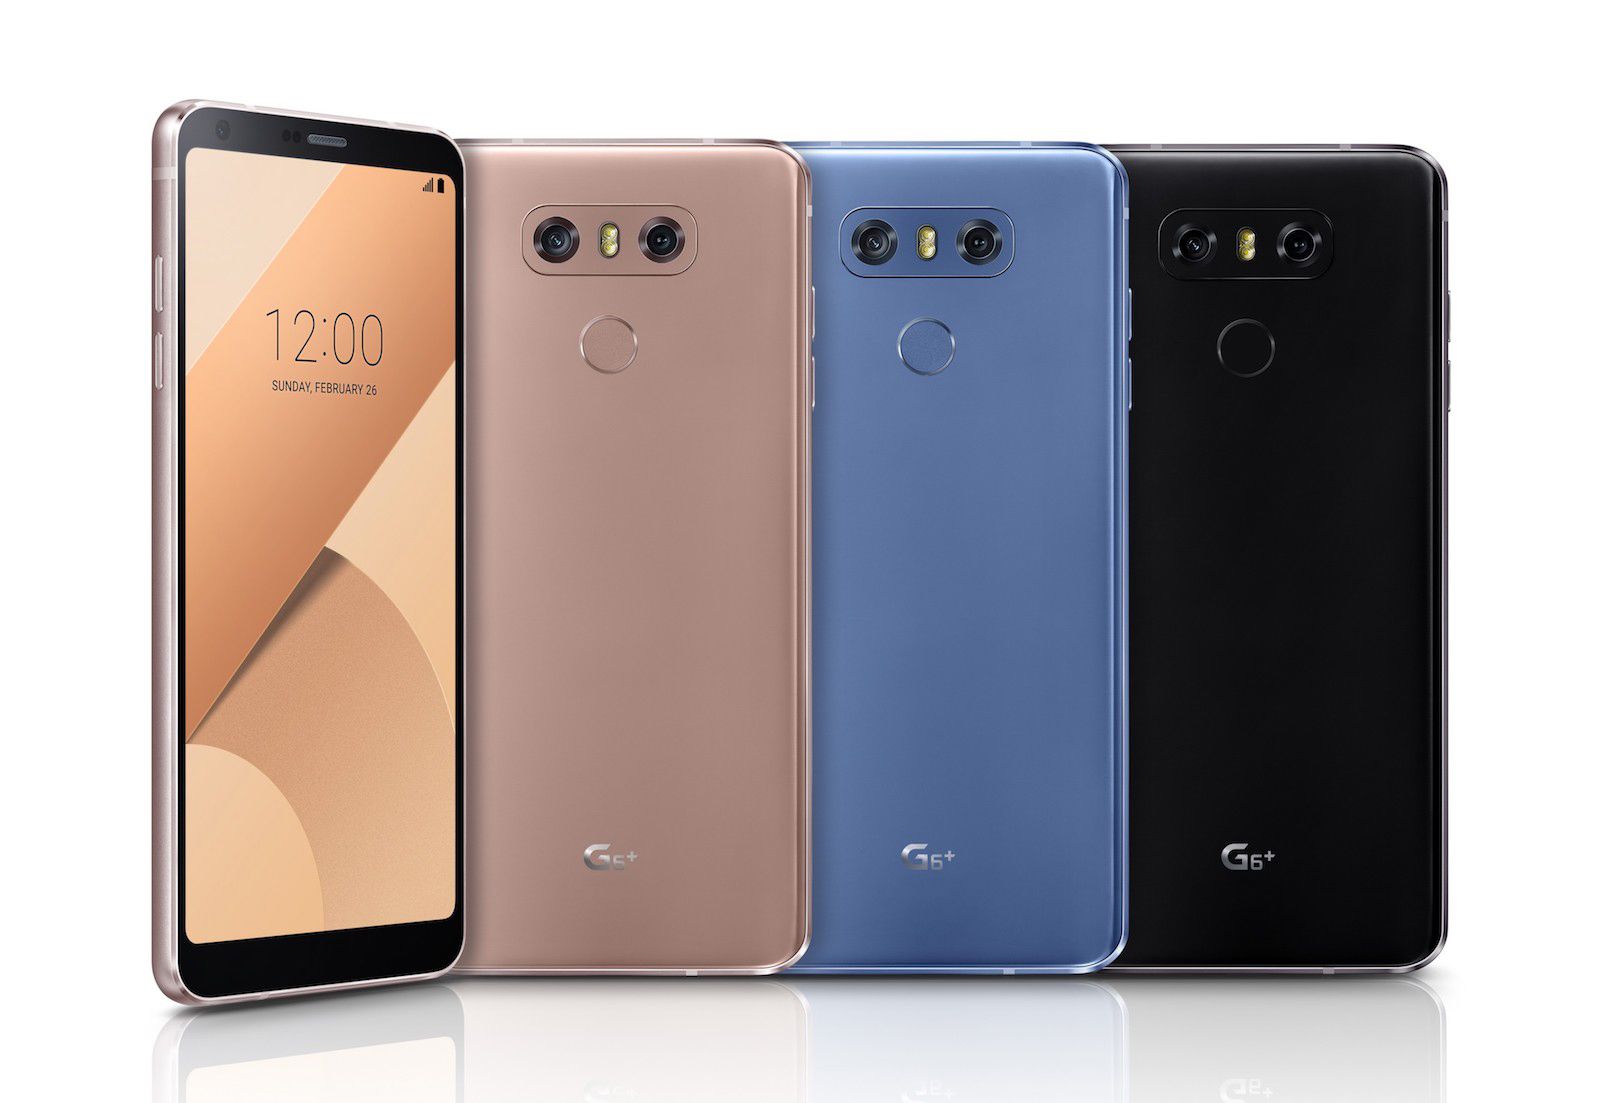 LG G6 Plus image 1